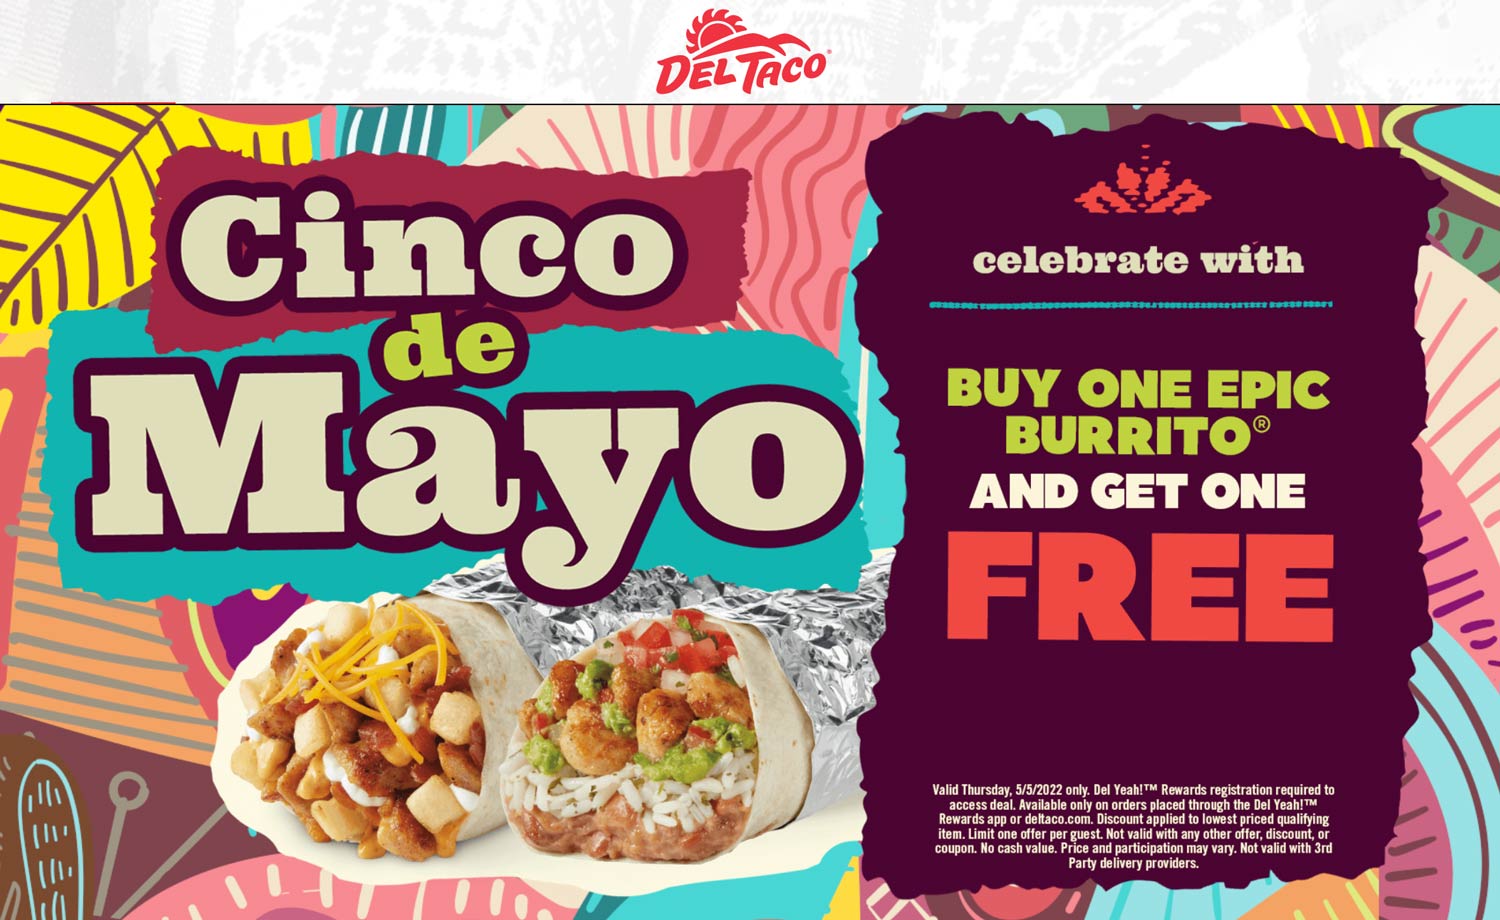 Del Taco restaurants Coupon  Second burrito free via mobile today at Del Taco #deltaco 